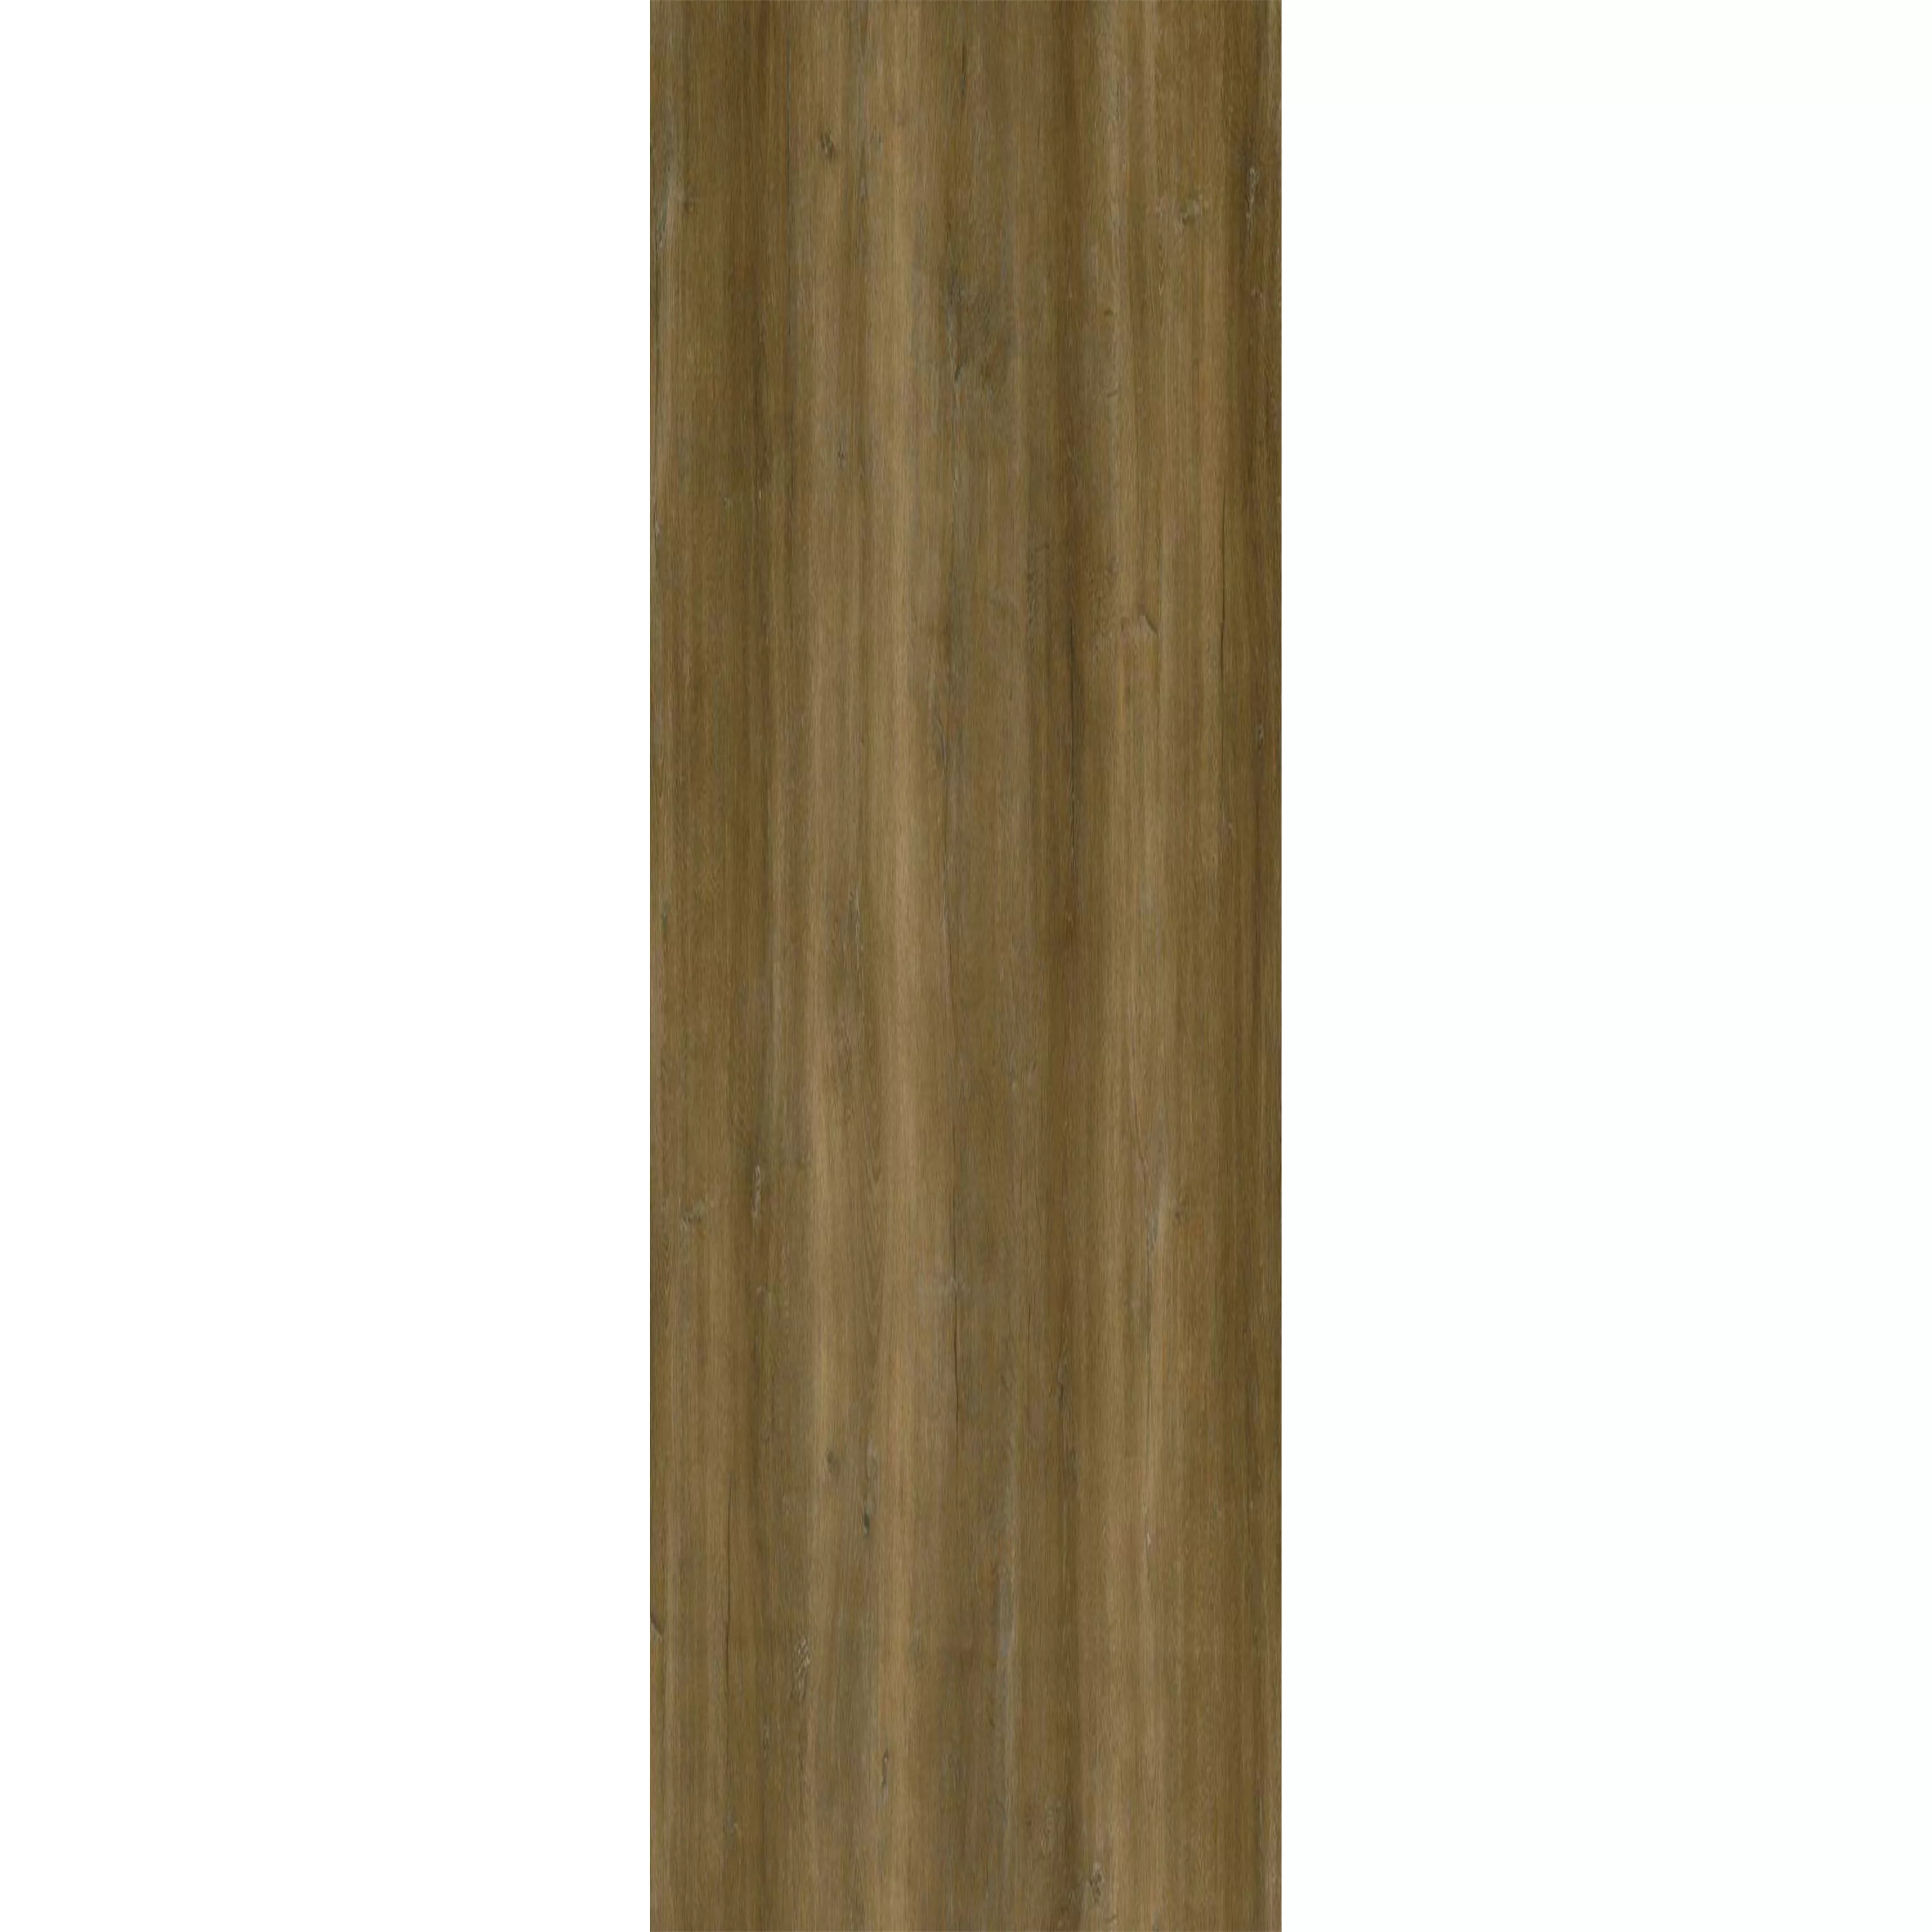 Suelo De Vinilo Sistema De Clic Dinuba Marrón Claro 17,2x121cm